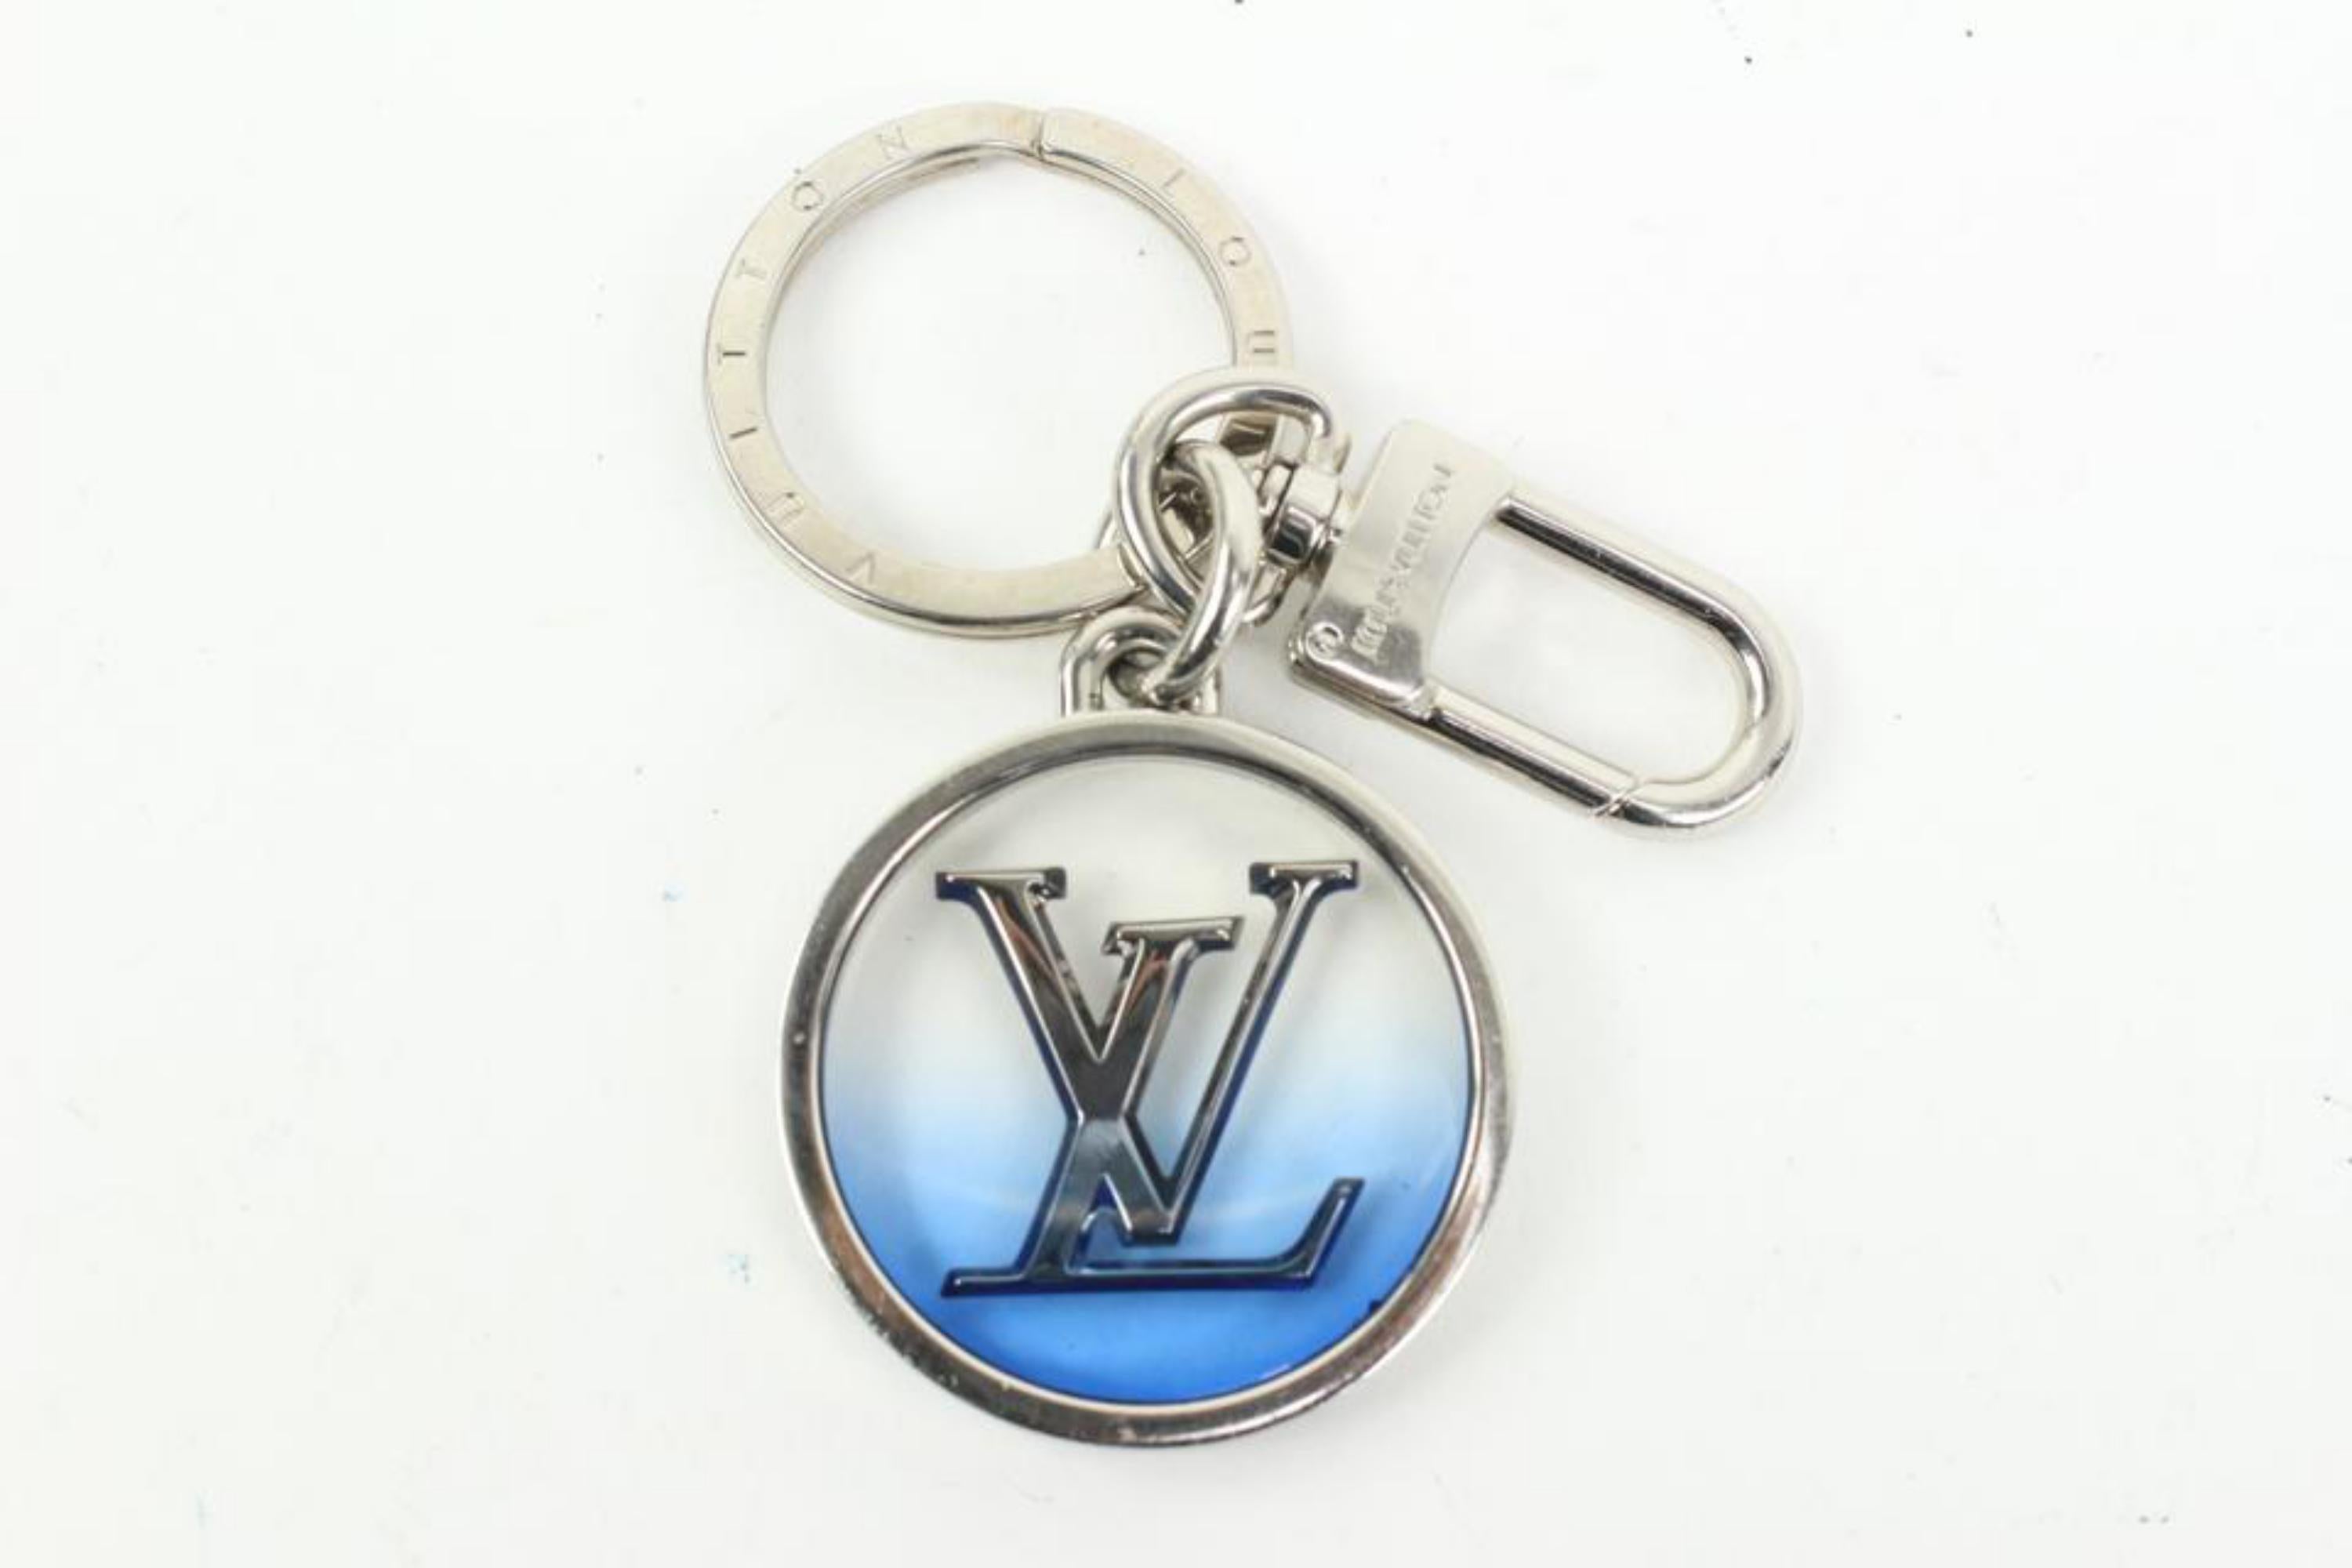 Louis Vuitton Bijou De Sac Et Porte Cles LV Inclusion Bag Charm Keychain  95lz419s
Date Code/Serial Number: M69852 DI0280
Made In: Italy
Measurements: Length:  1.75